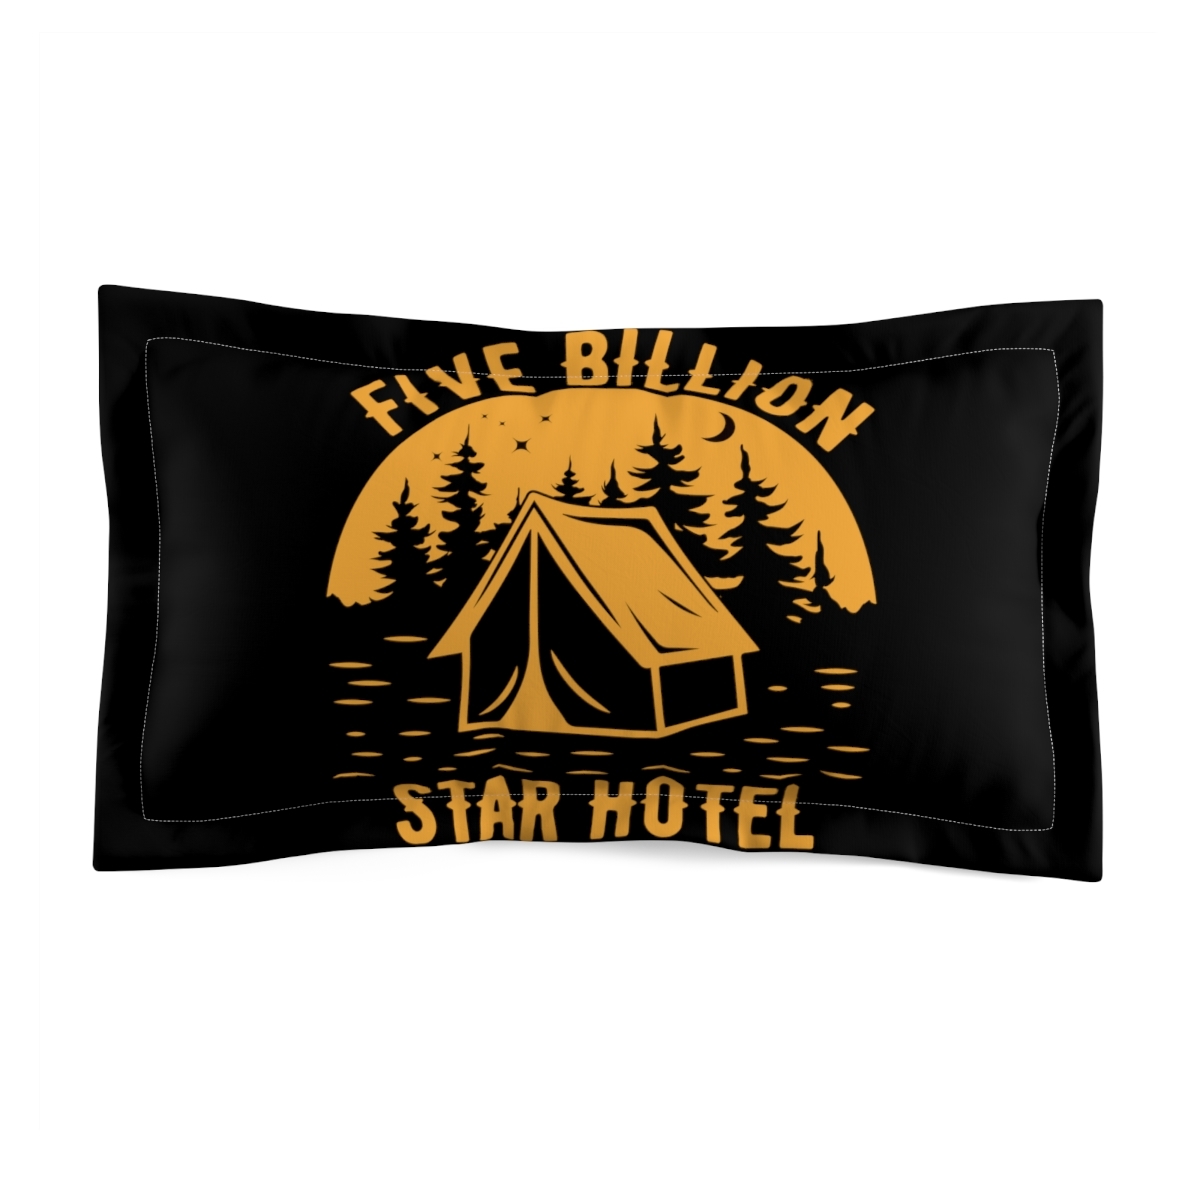 Microfiber Pillow Sham - Five Billion Star Hotel Tent - Super Soft, Multiple Siz - $32.96 - $35.02